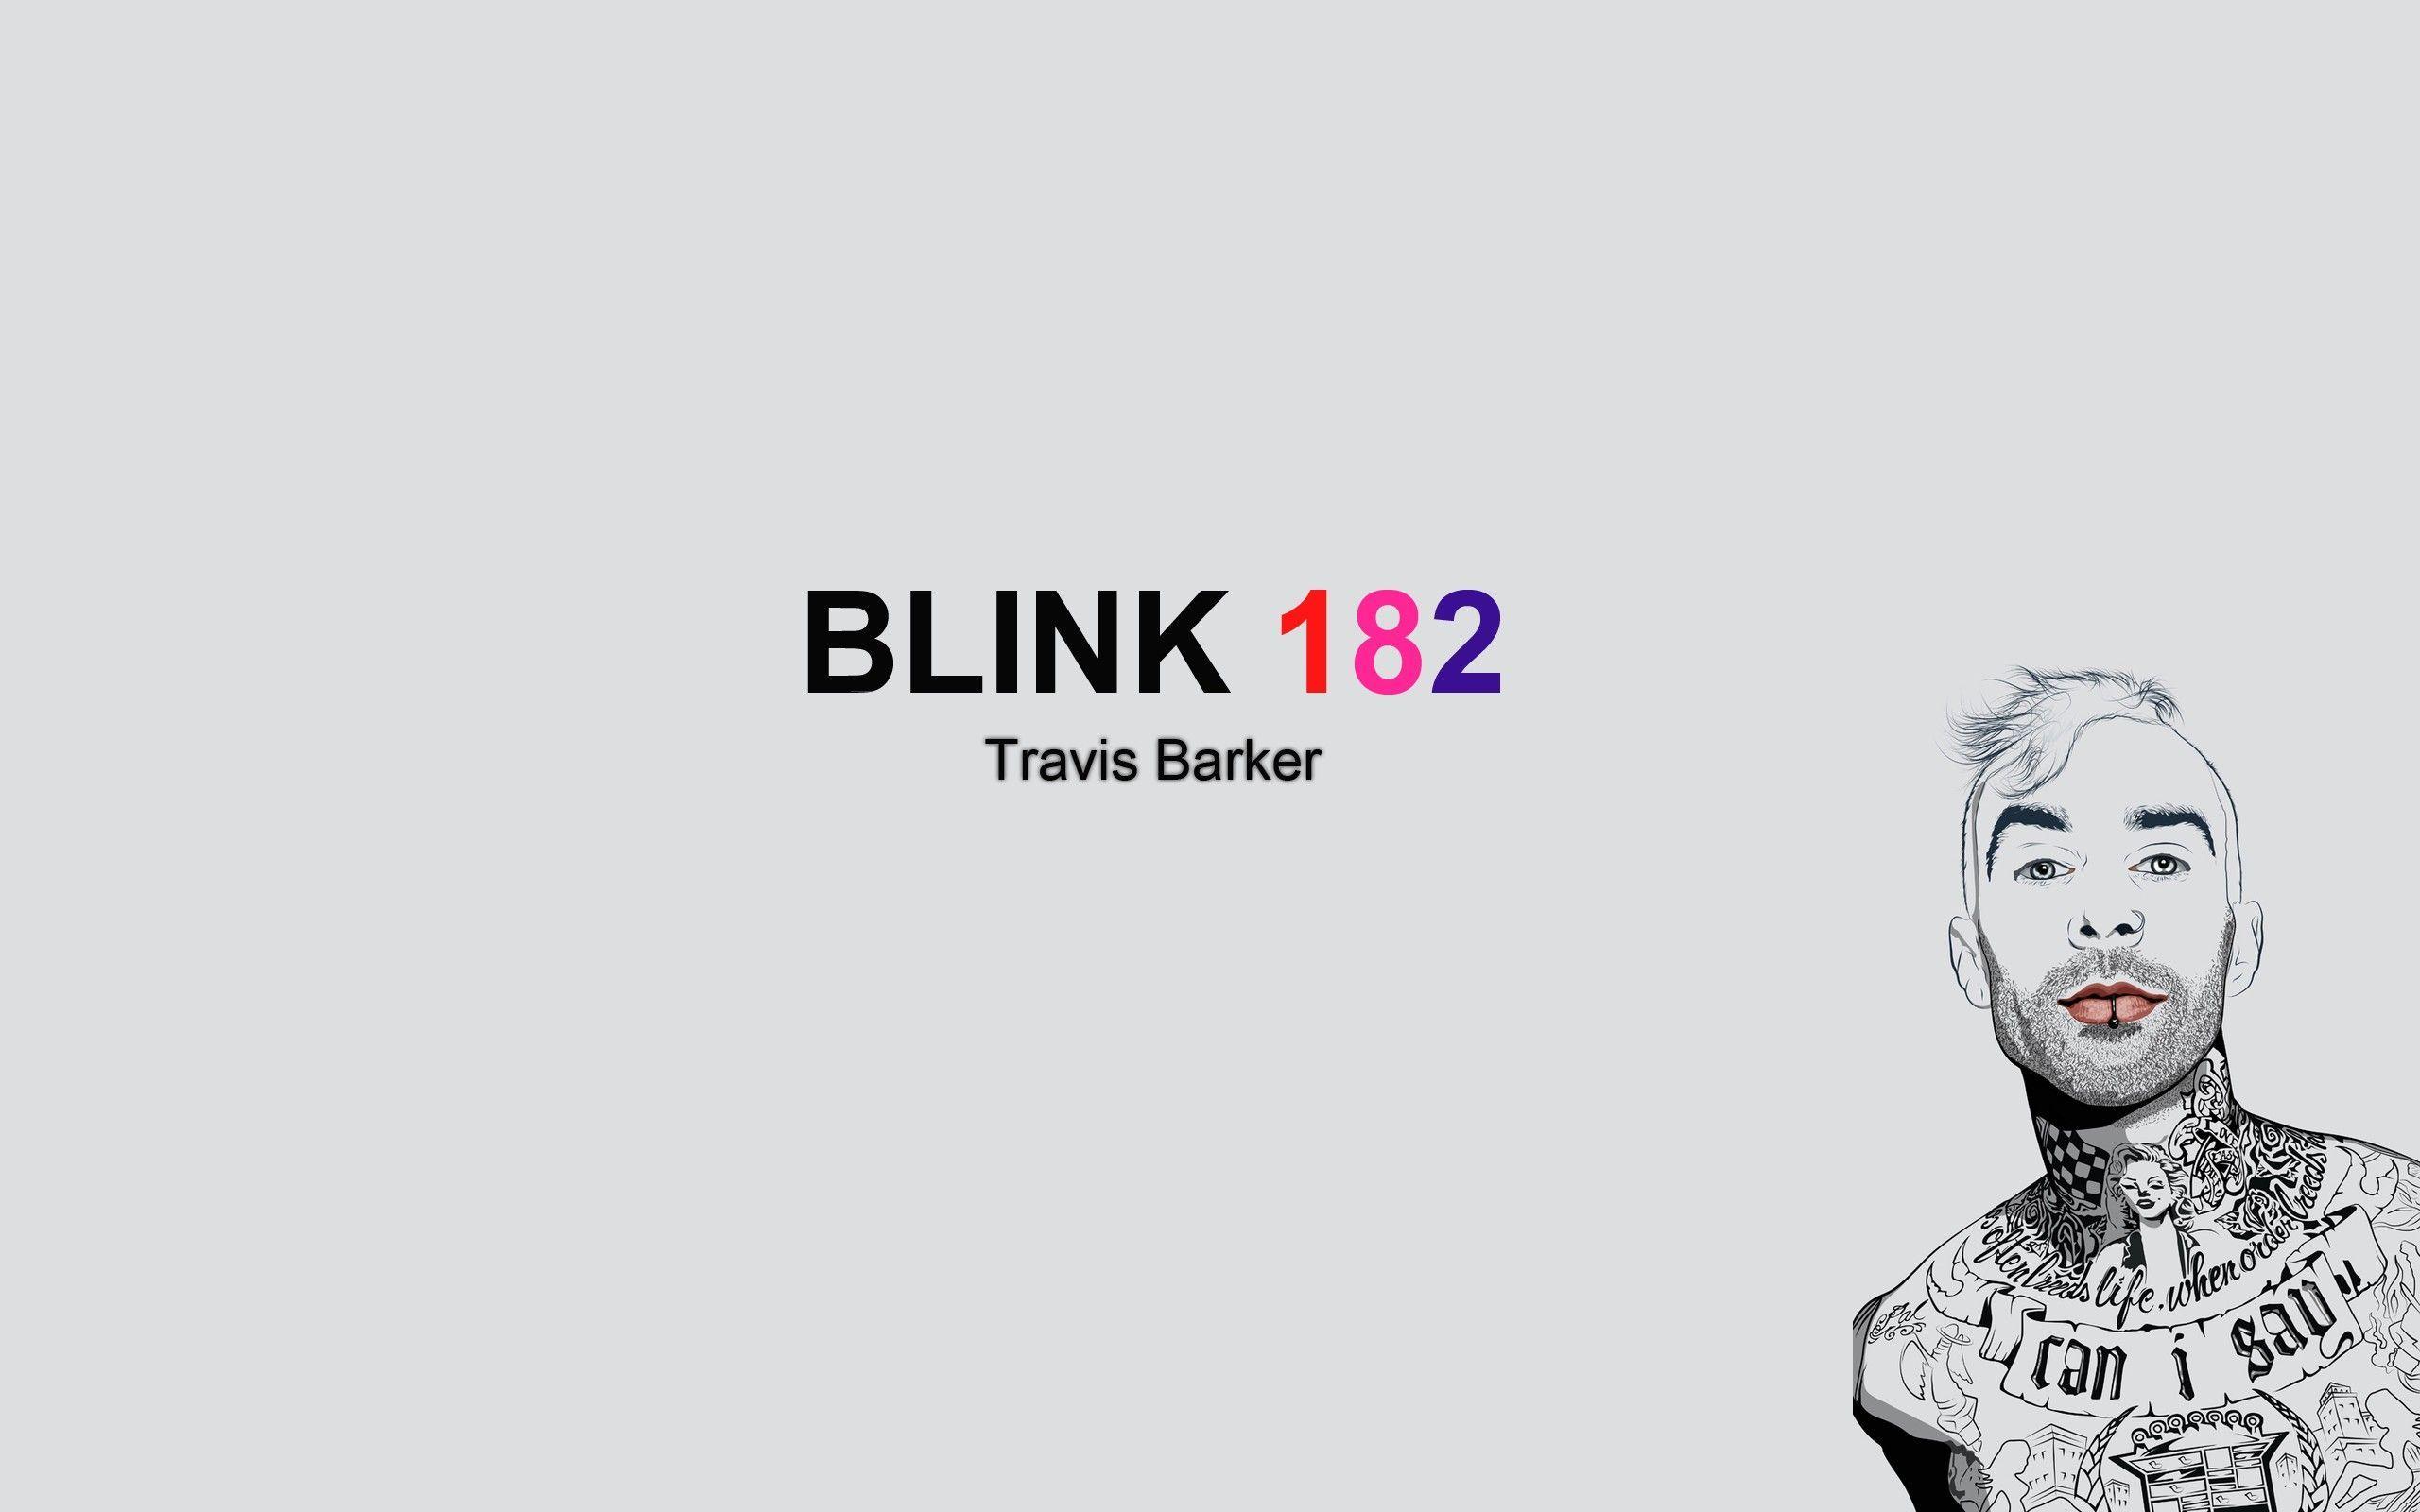 Blink 182 Travis Barker Wallpaper, Blink 182 Travis Barker